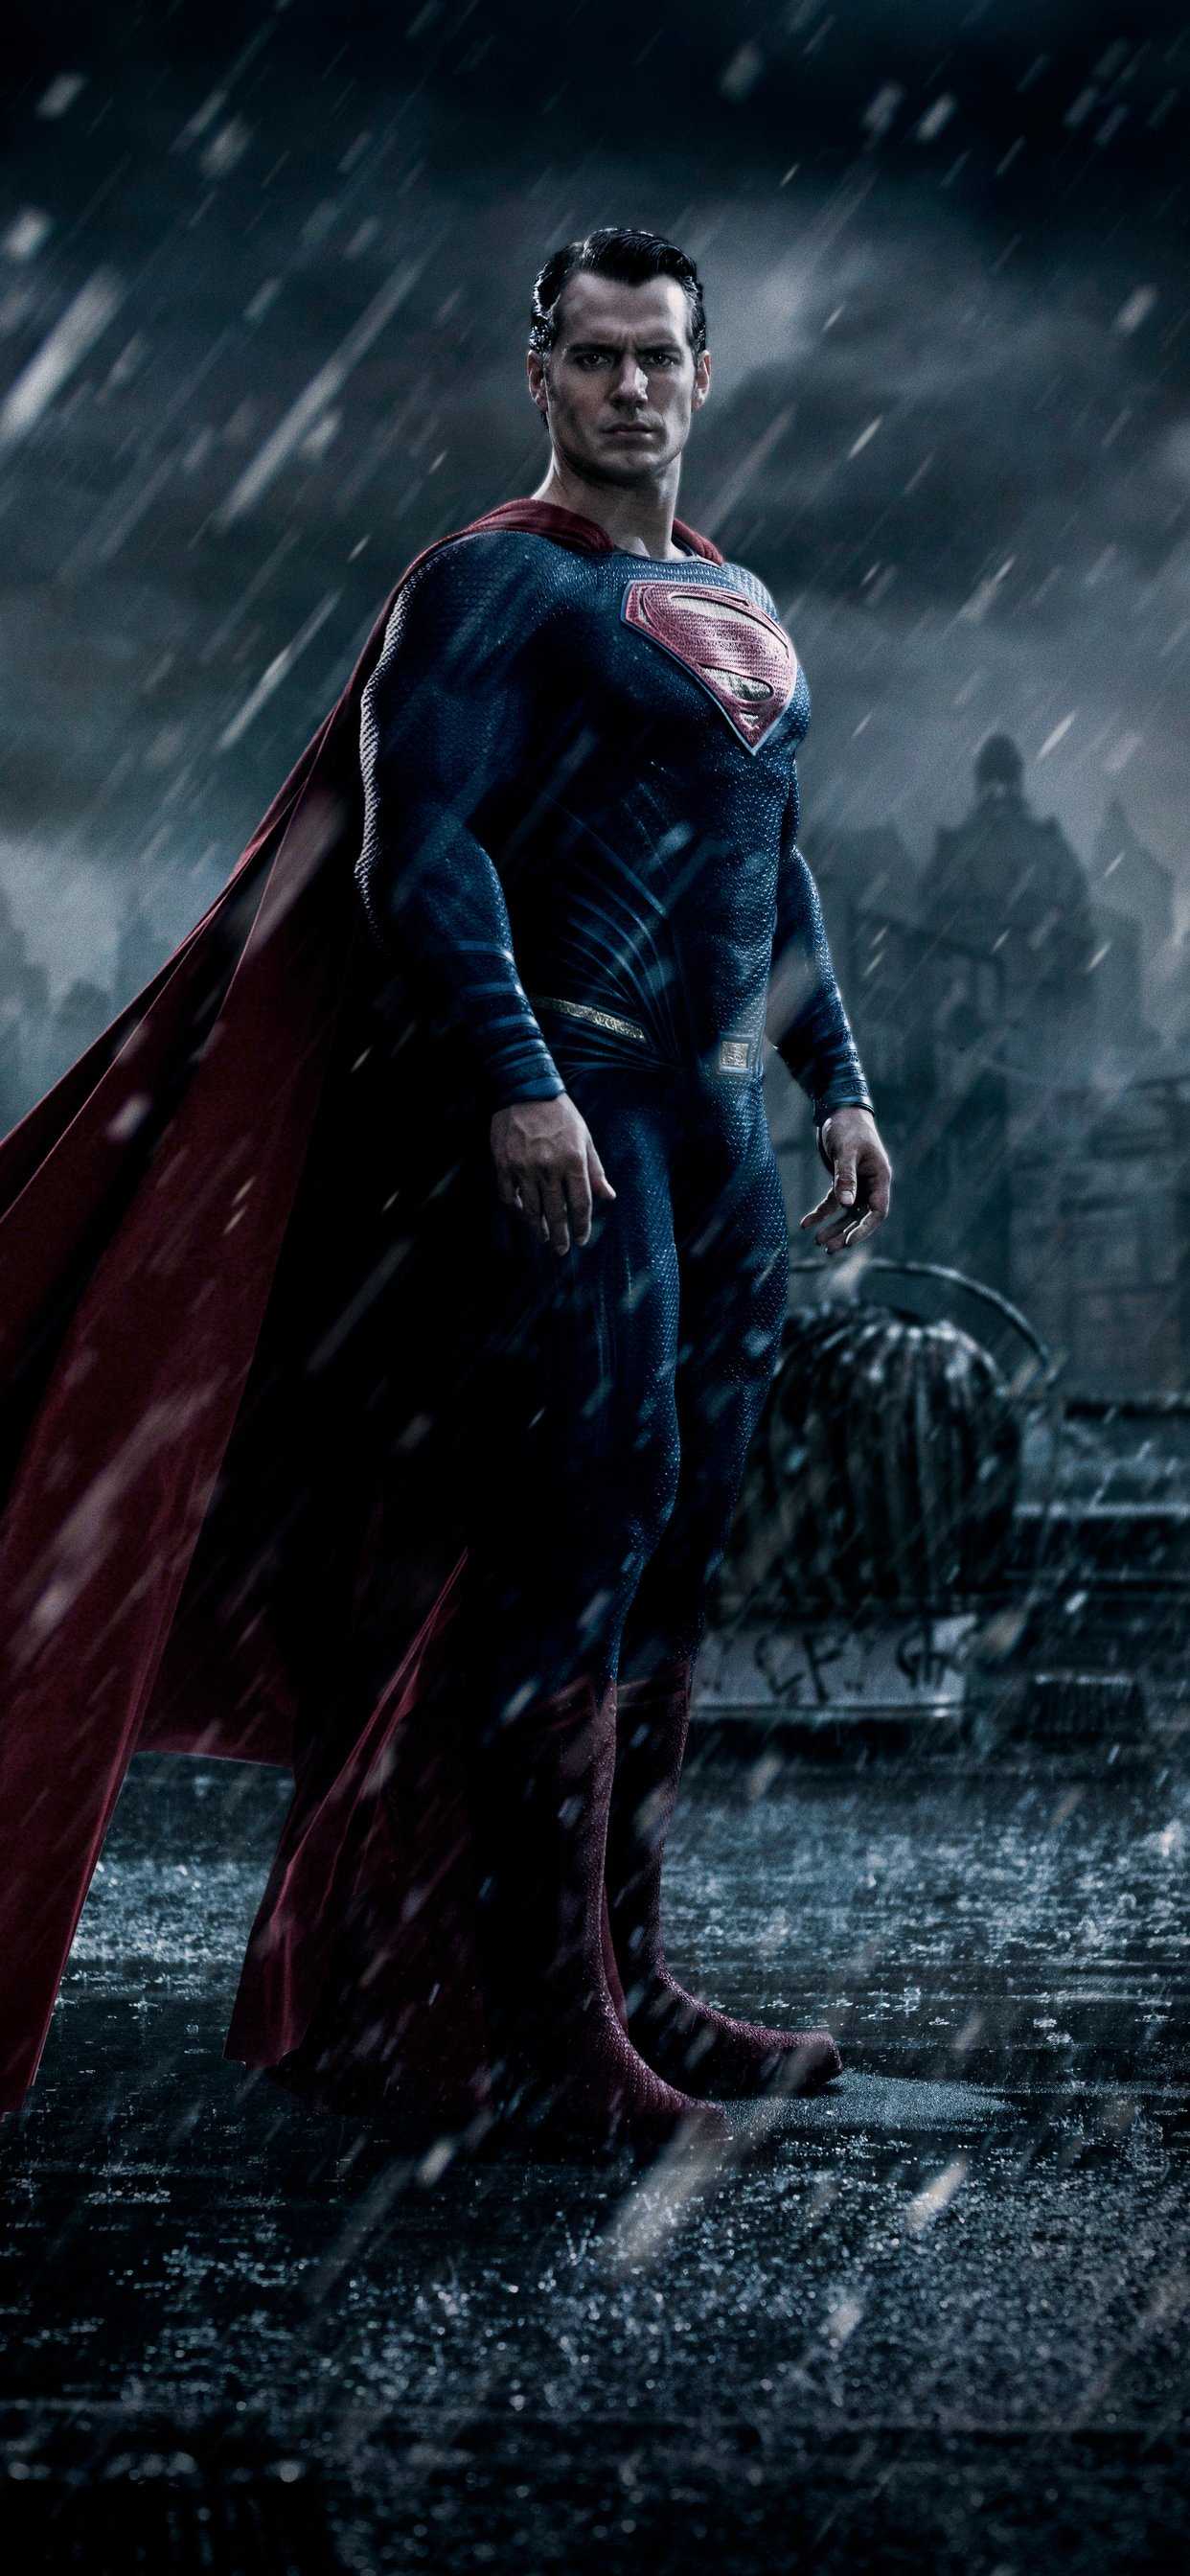 Superman Henry Cavill in Man of Steel HD Wallpaper (1242x2688)